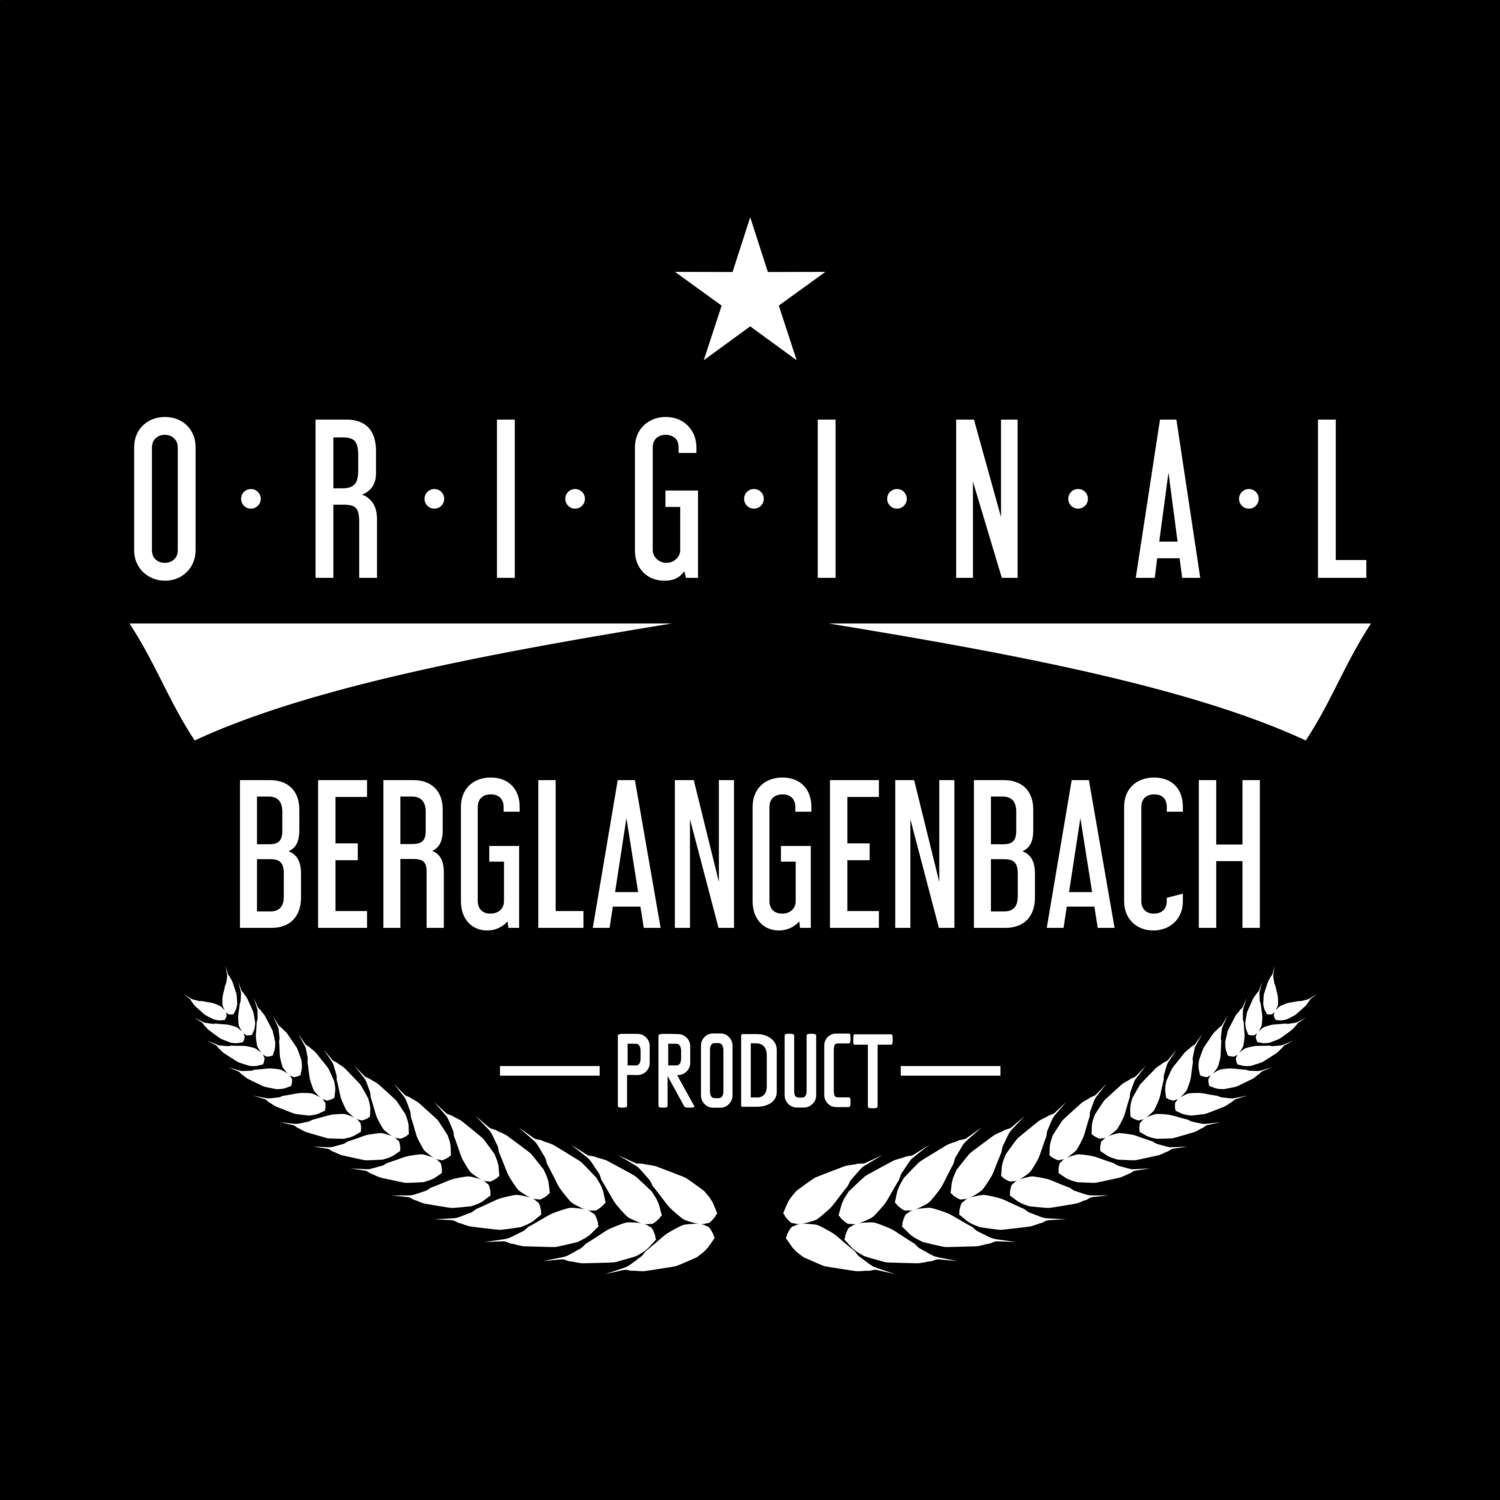 Berglangenbach T-Shirt »Original Product«